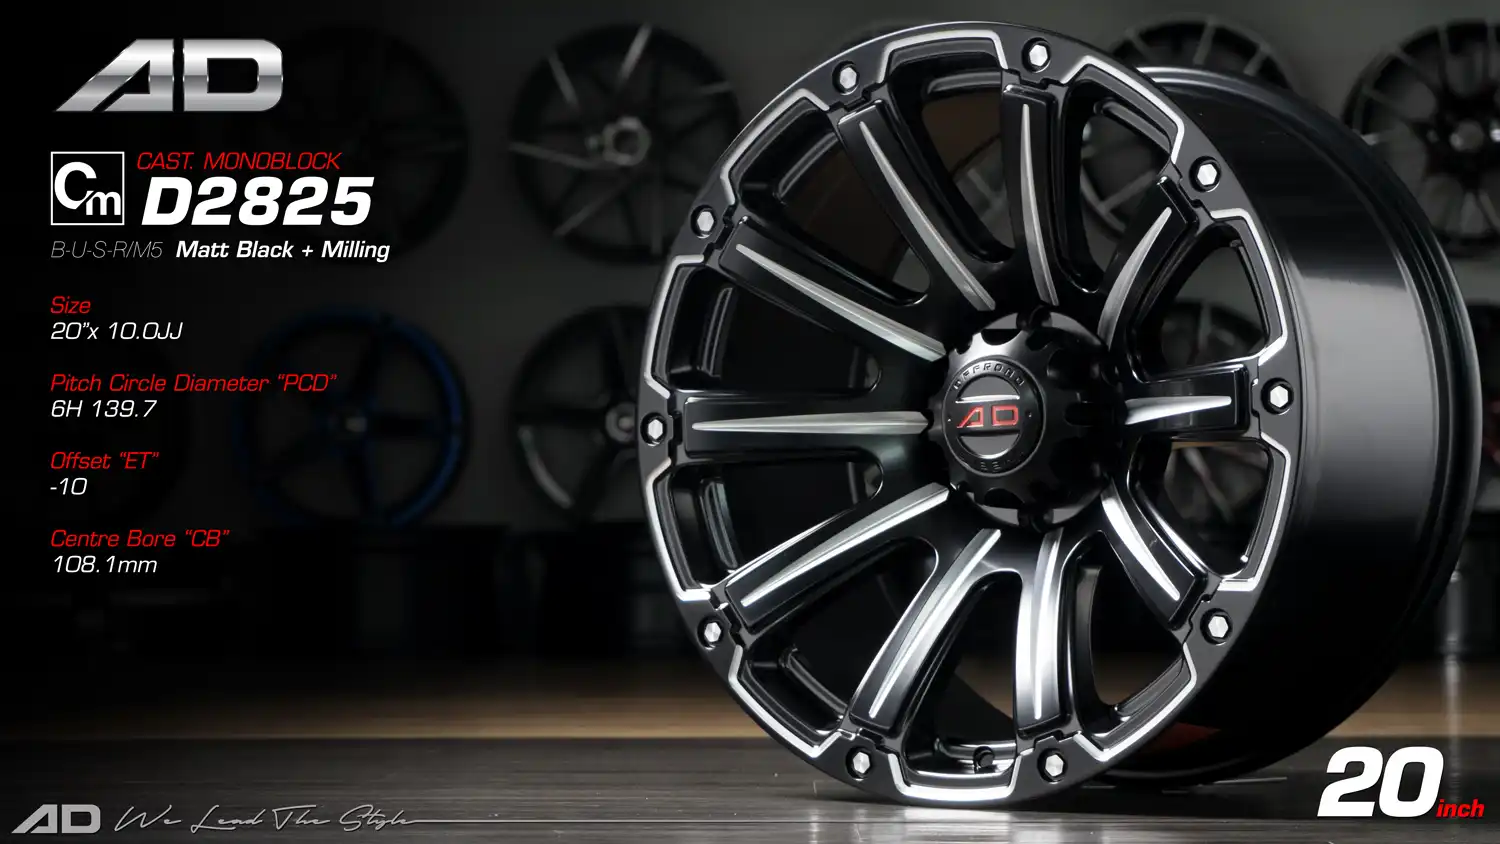 Ad wheels | Cast Monoblock 2825 20 inch 6H139.7